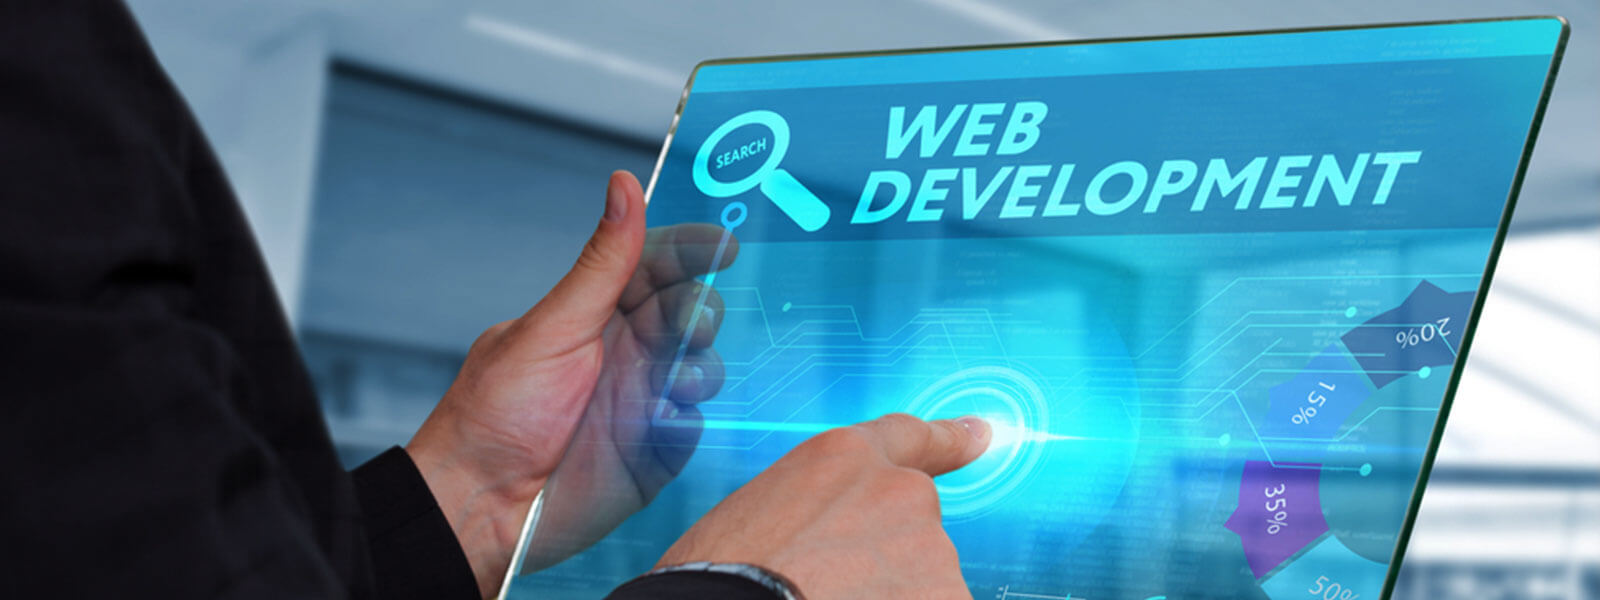 Custom Web Development Services